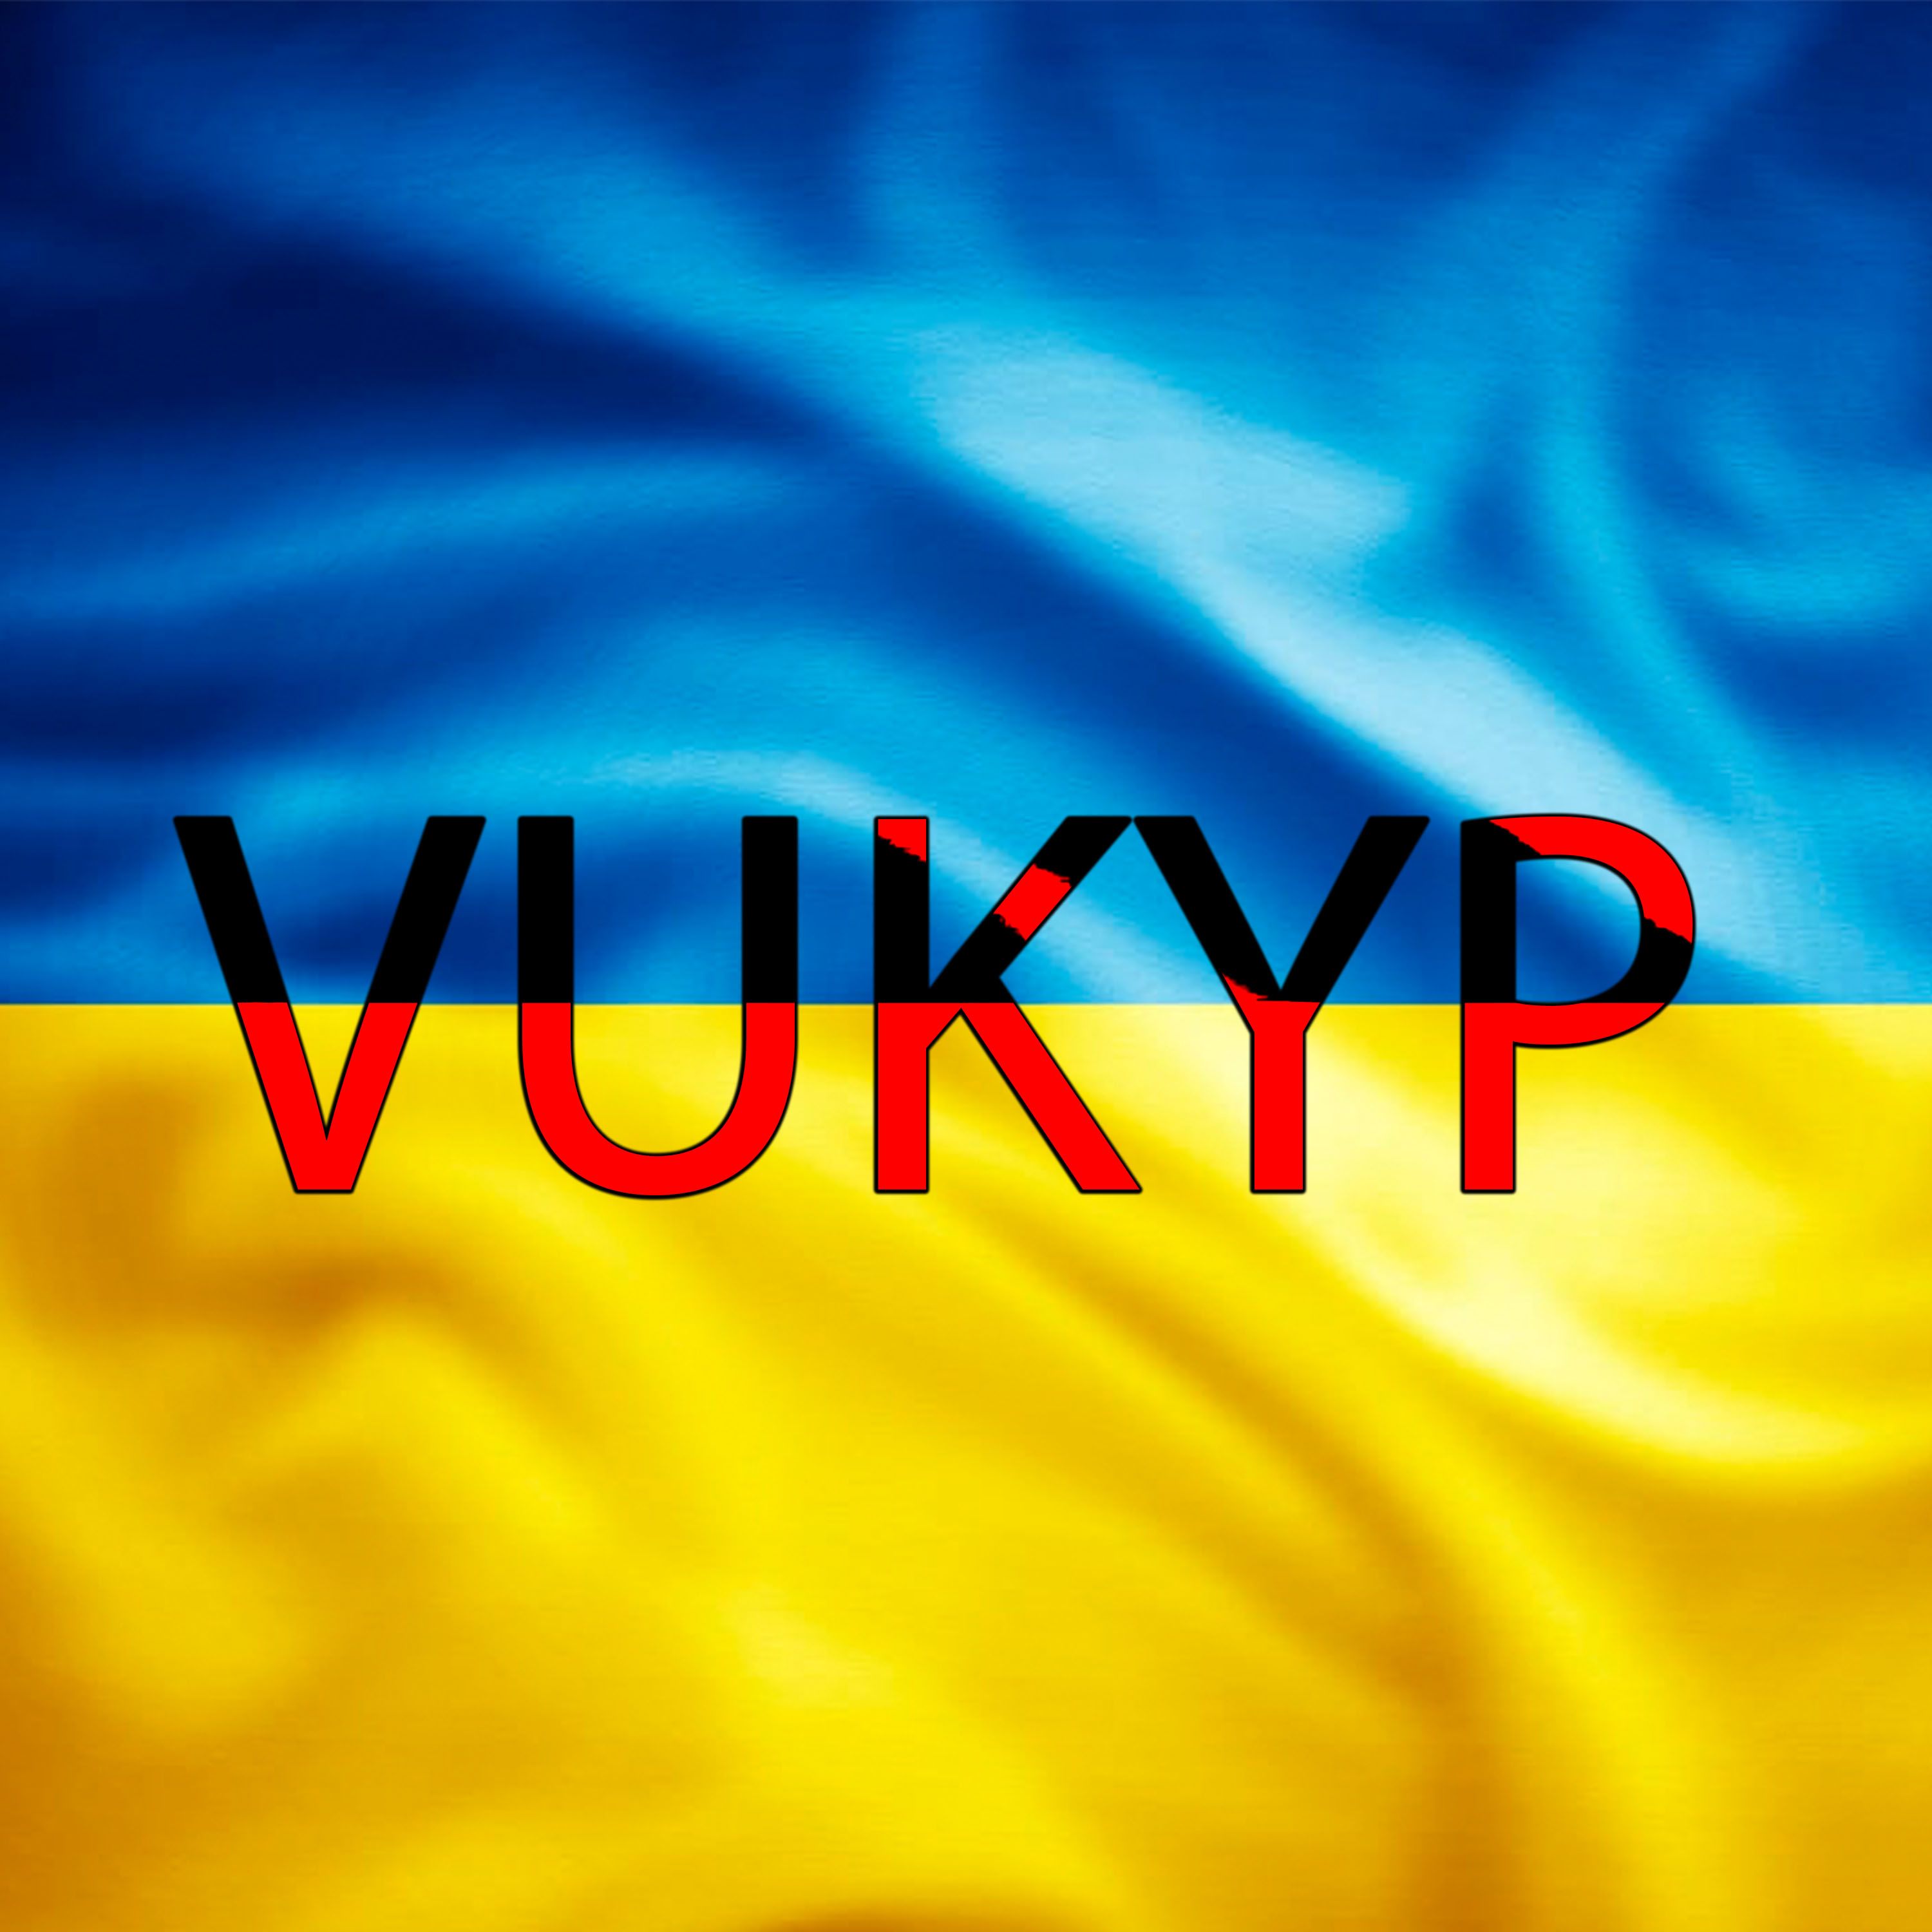 Aflaai Vukyp - UKR